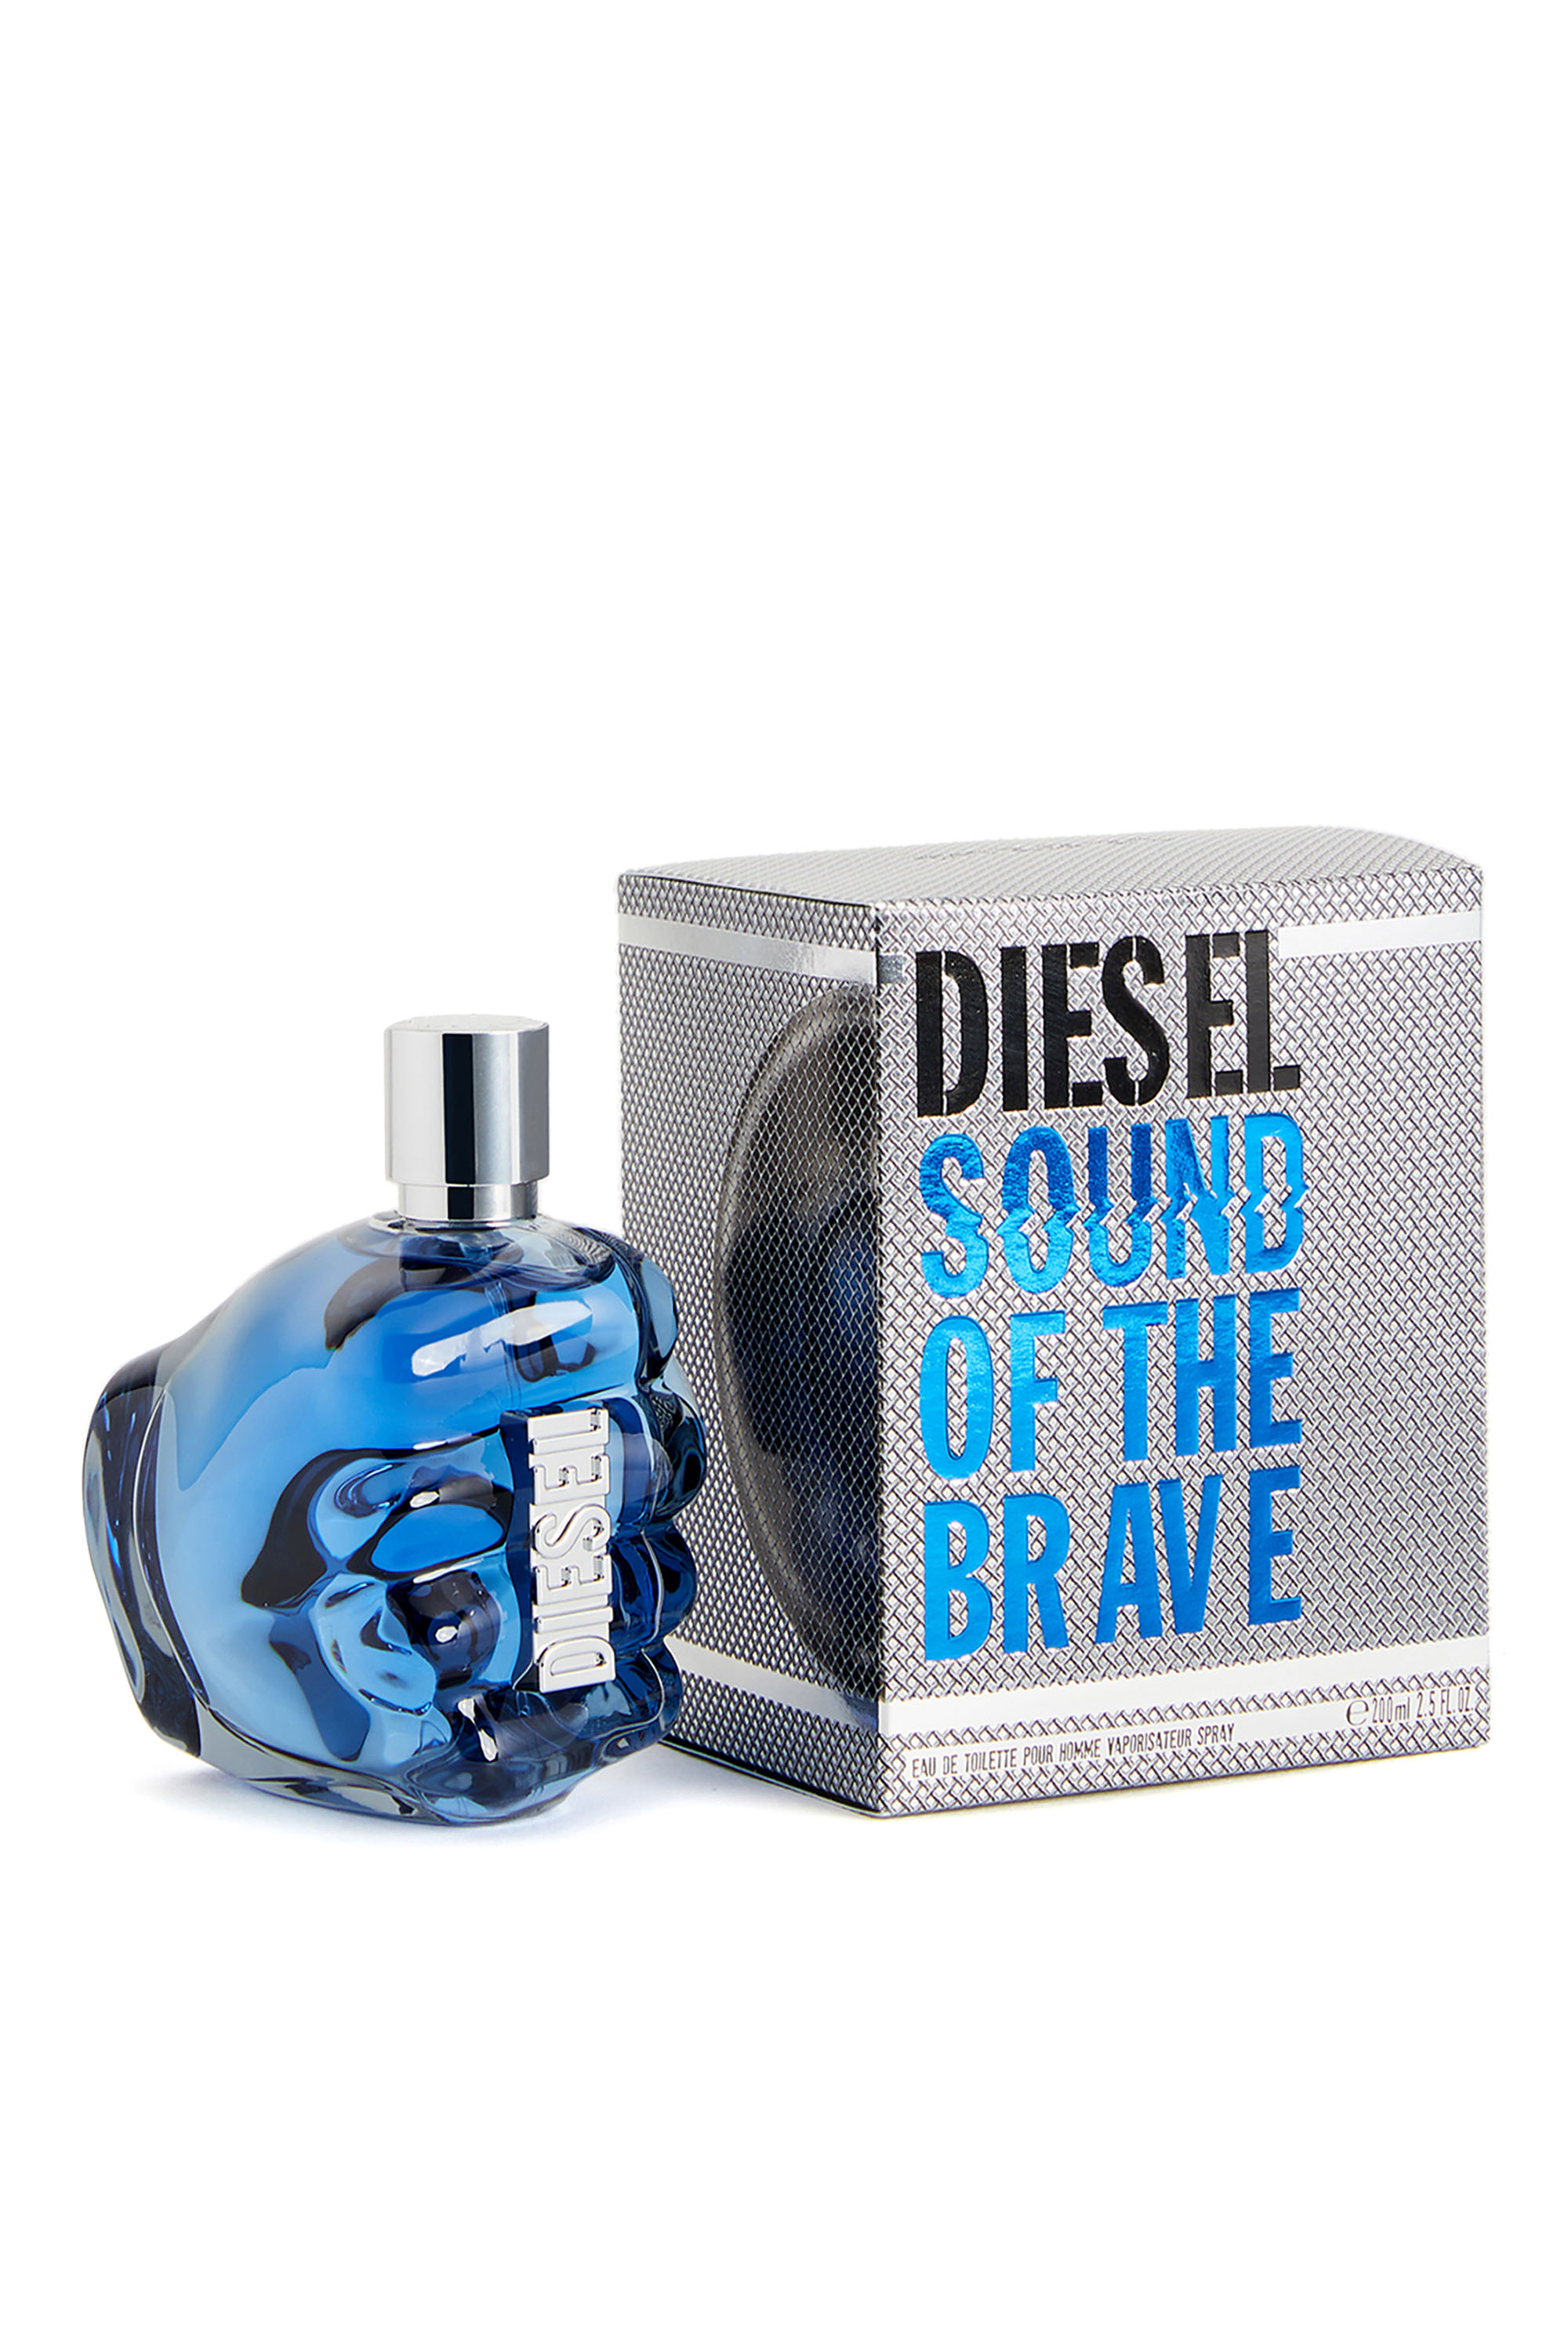 Diesel - SOUND OF THE BRAVE 200ML, Blue - Image 3